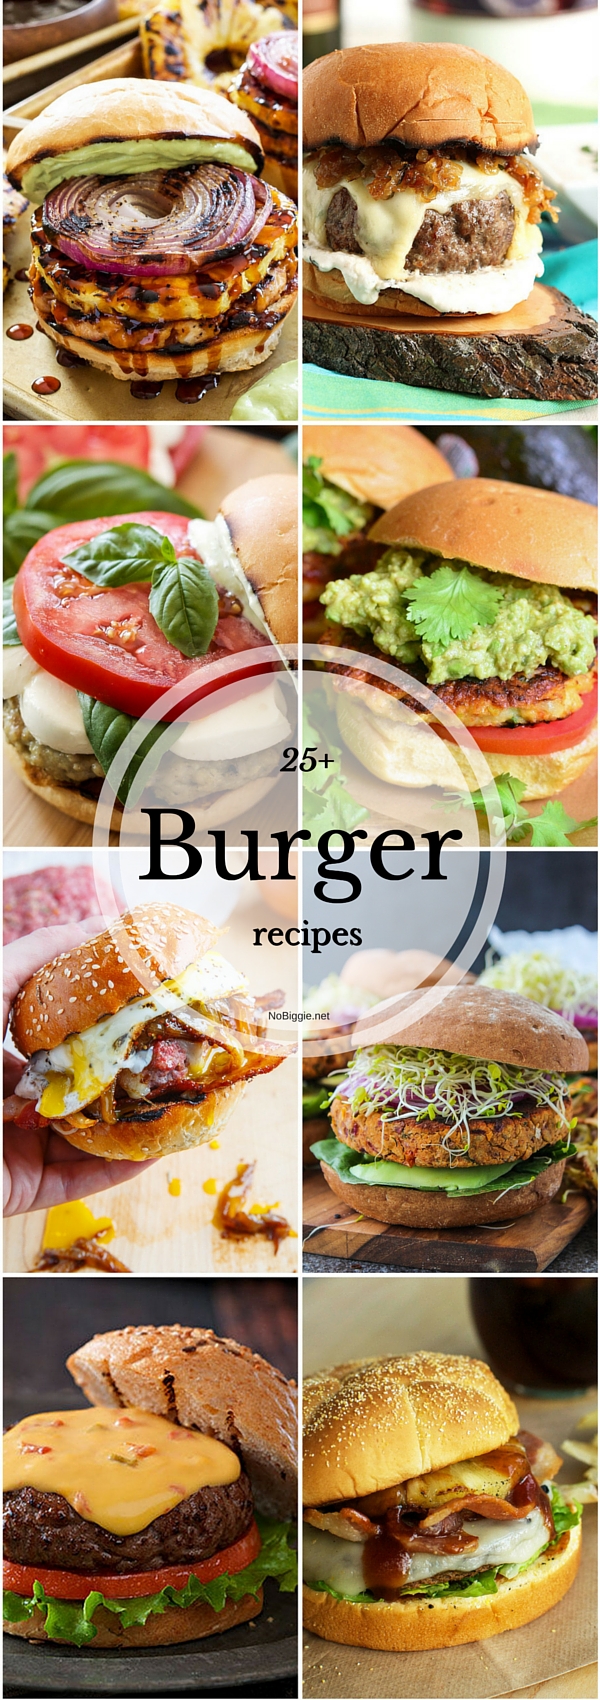 25+ Burger recipes | NoBiggie.net